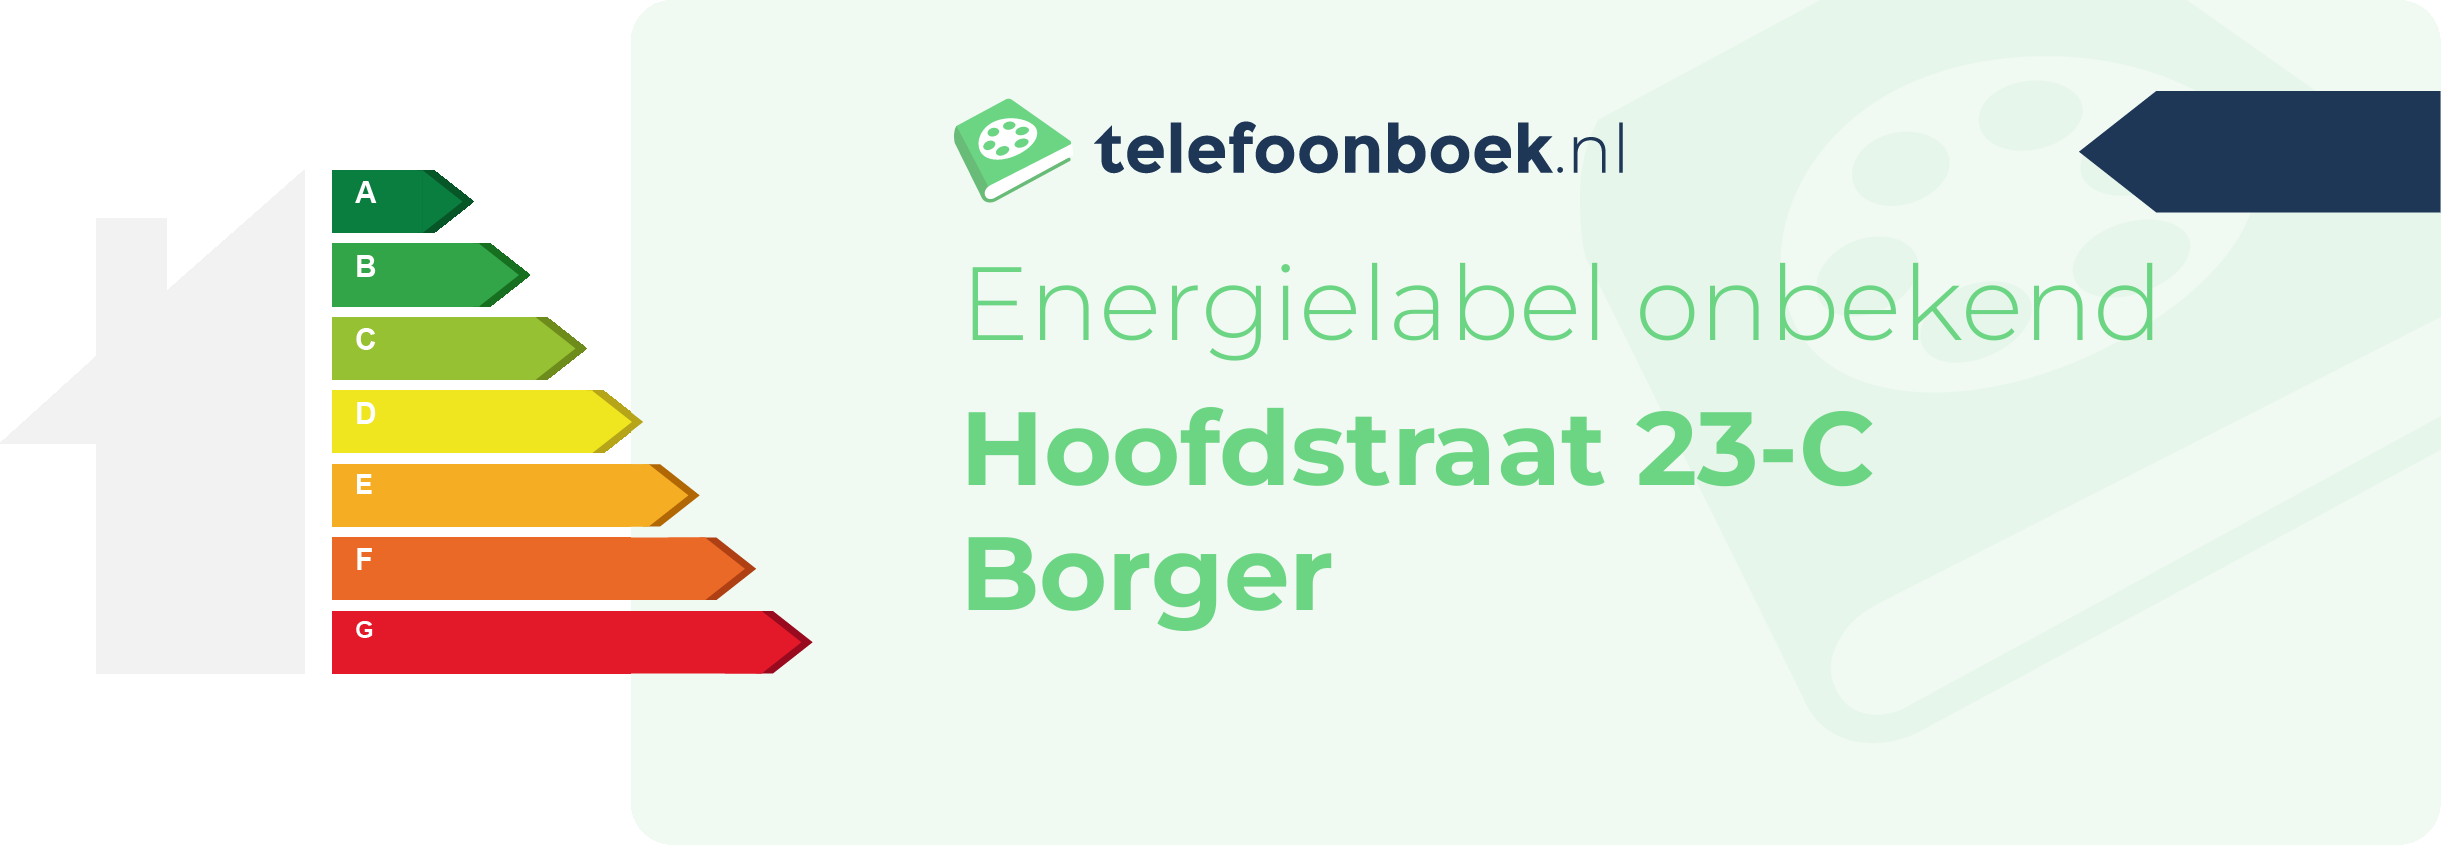 Energielabel Hoofdstraat 23-C Borger